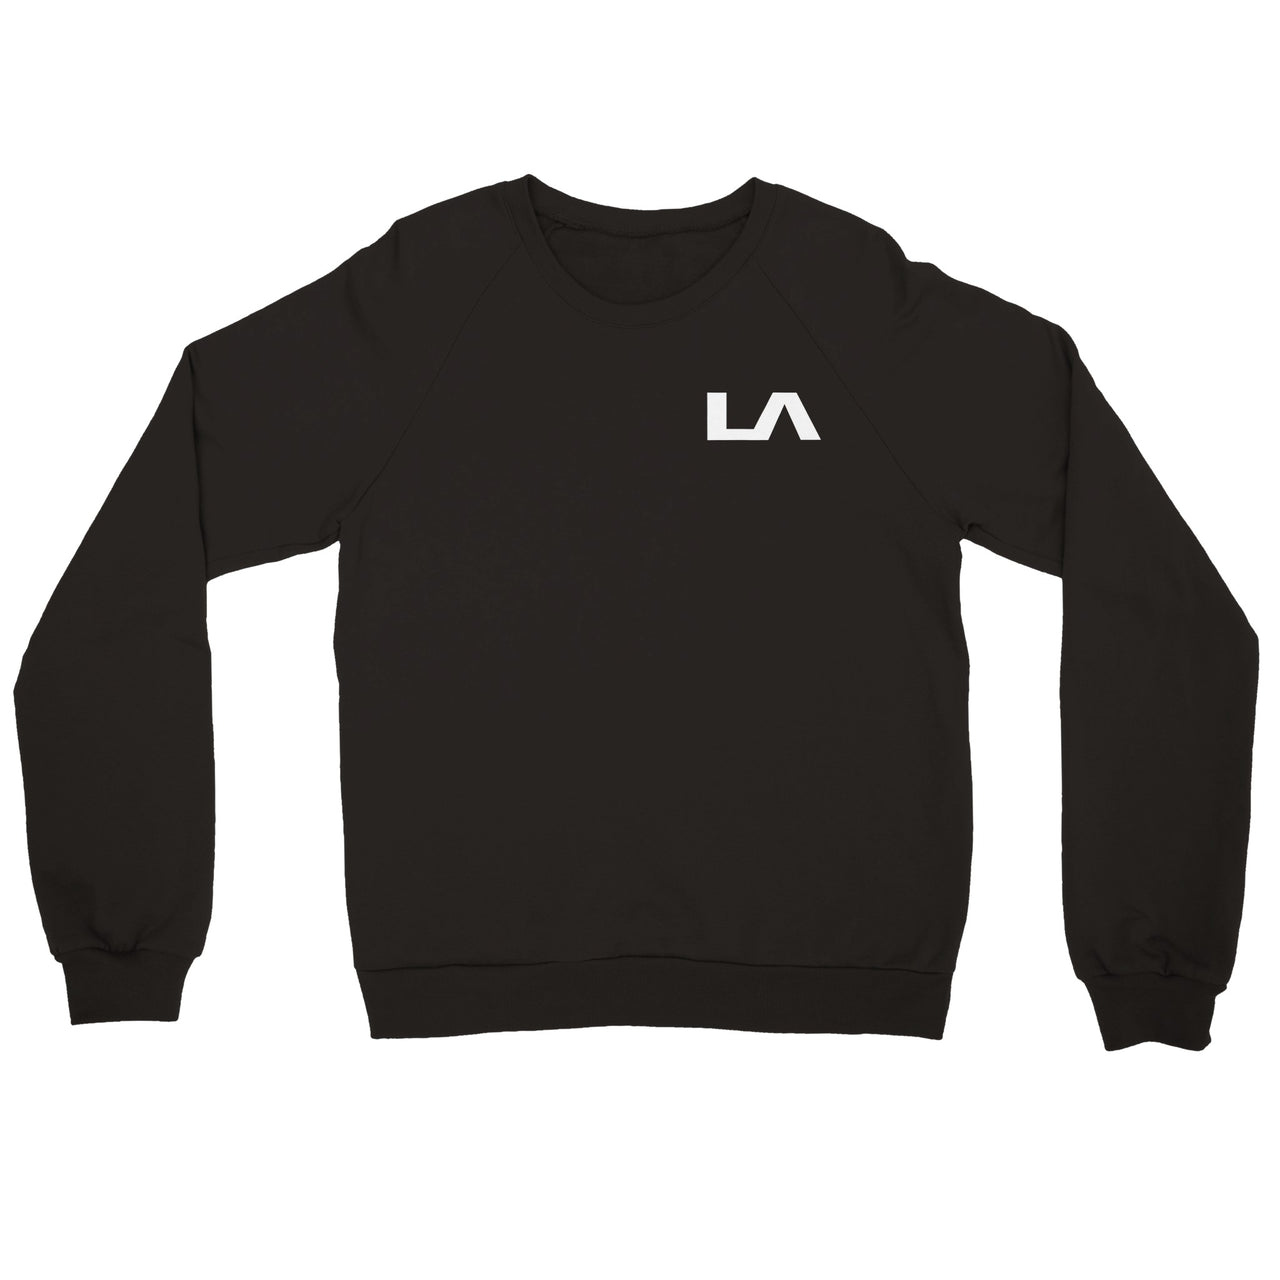 LA by LA Muscle Premium Unisex Crewneck Sweatshirt